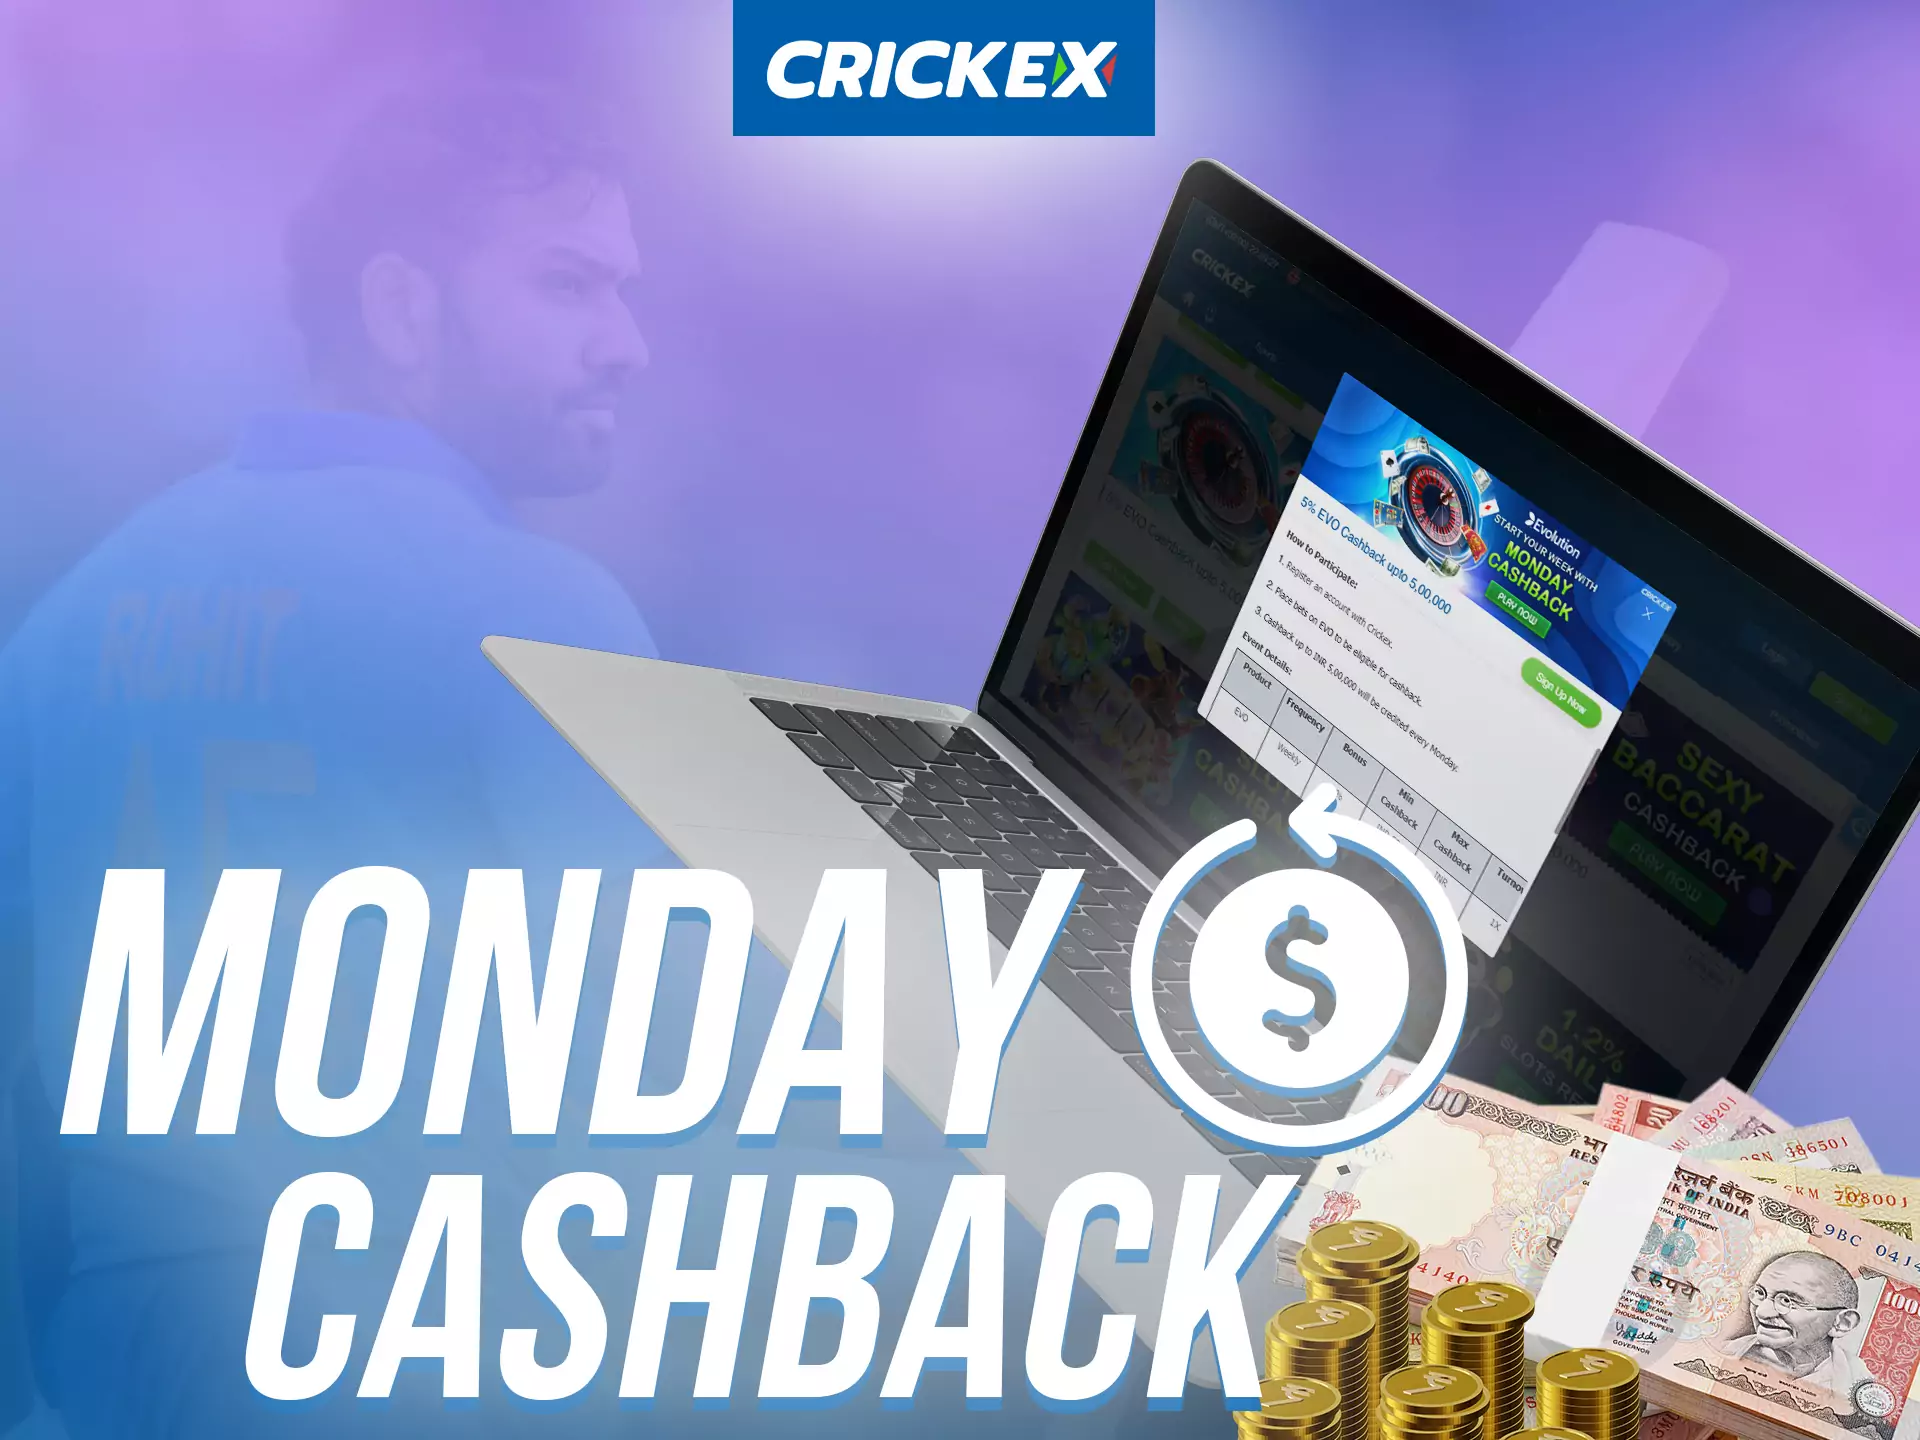 At Crickex, you can expect a cashback bonus on Mondays.